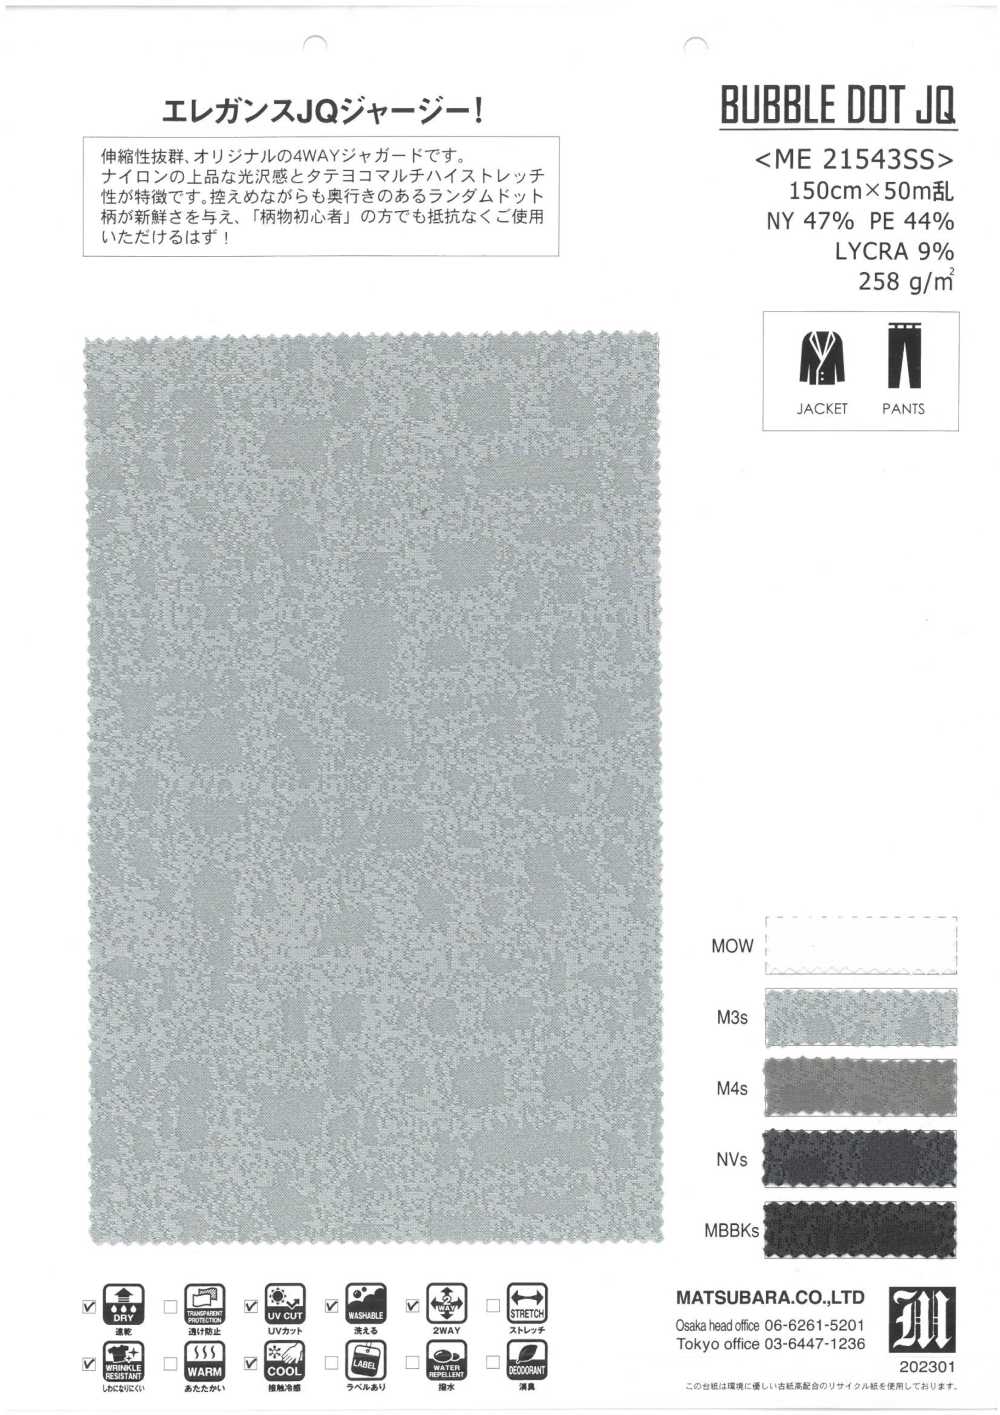 ME21543SS PUNTO DE BURBUJA JQ[Fabrica Textil] Matsubara